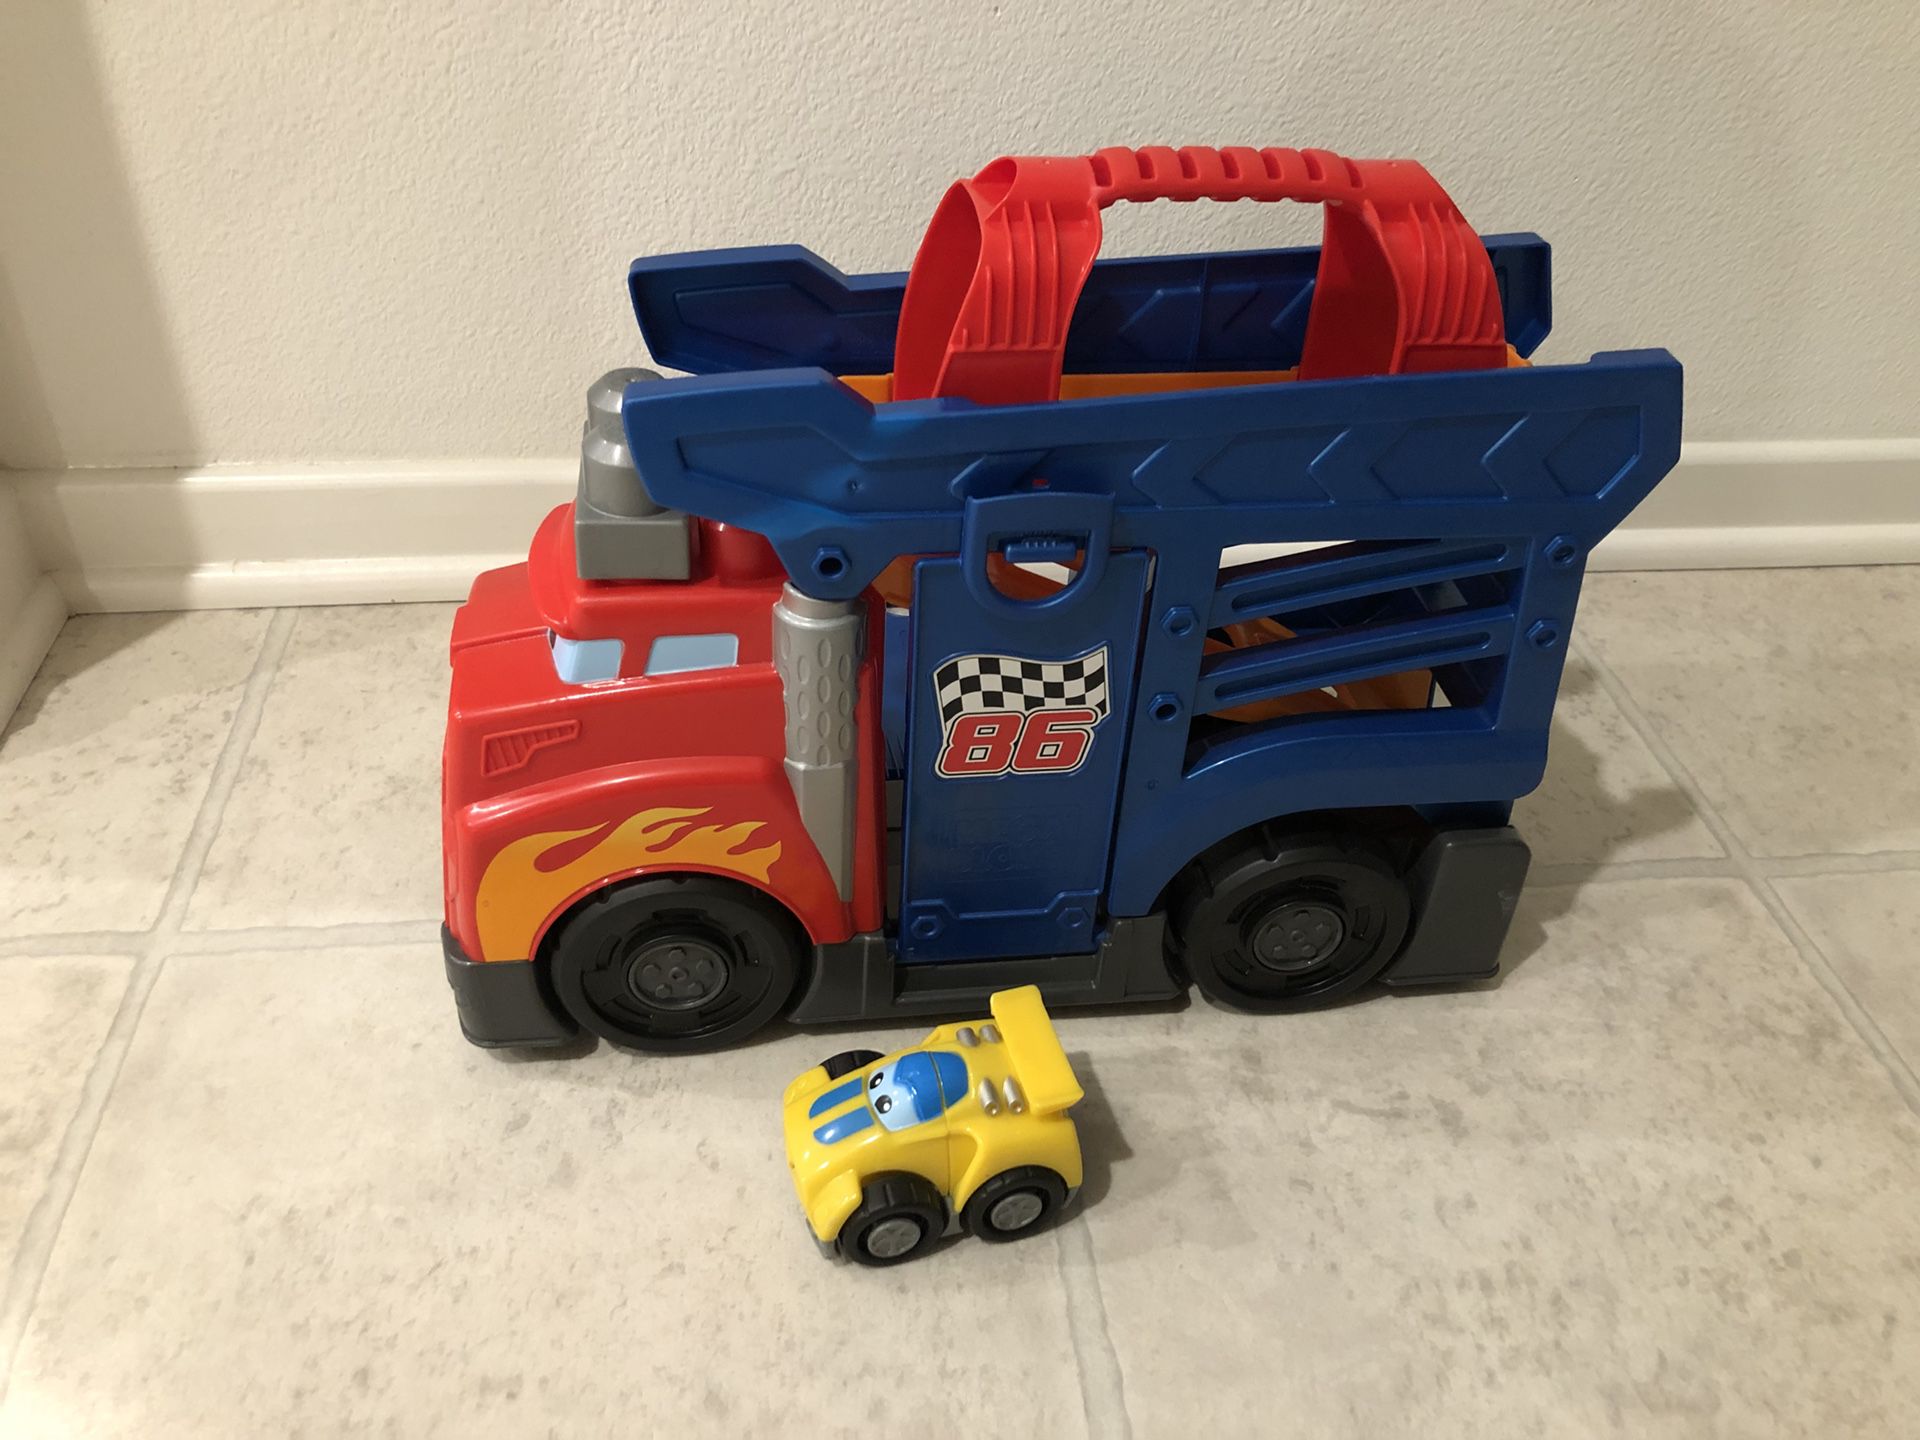 Race car and trailer